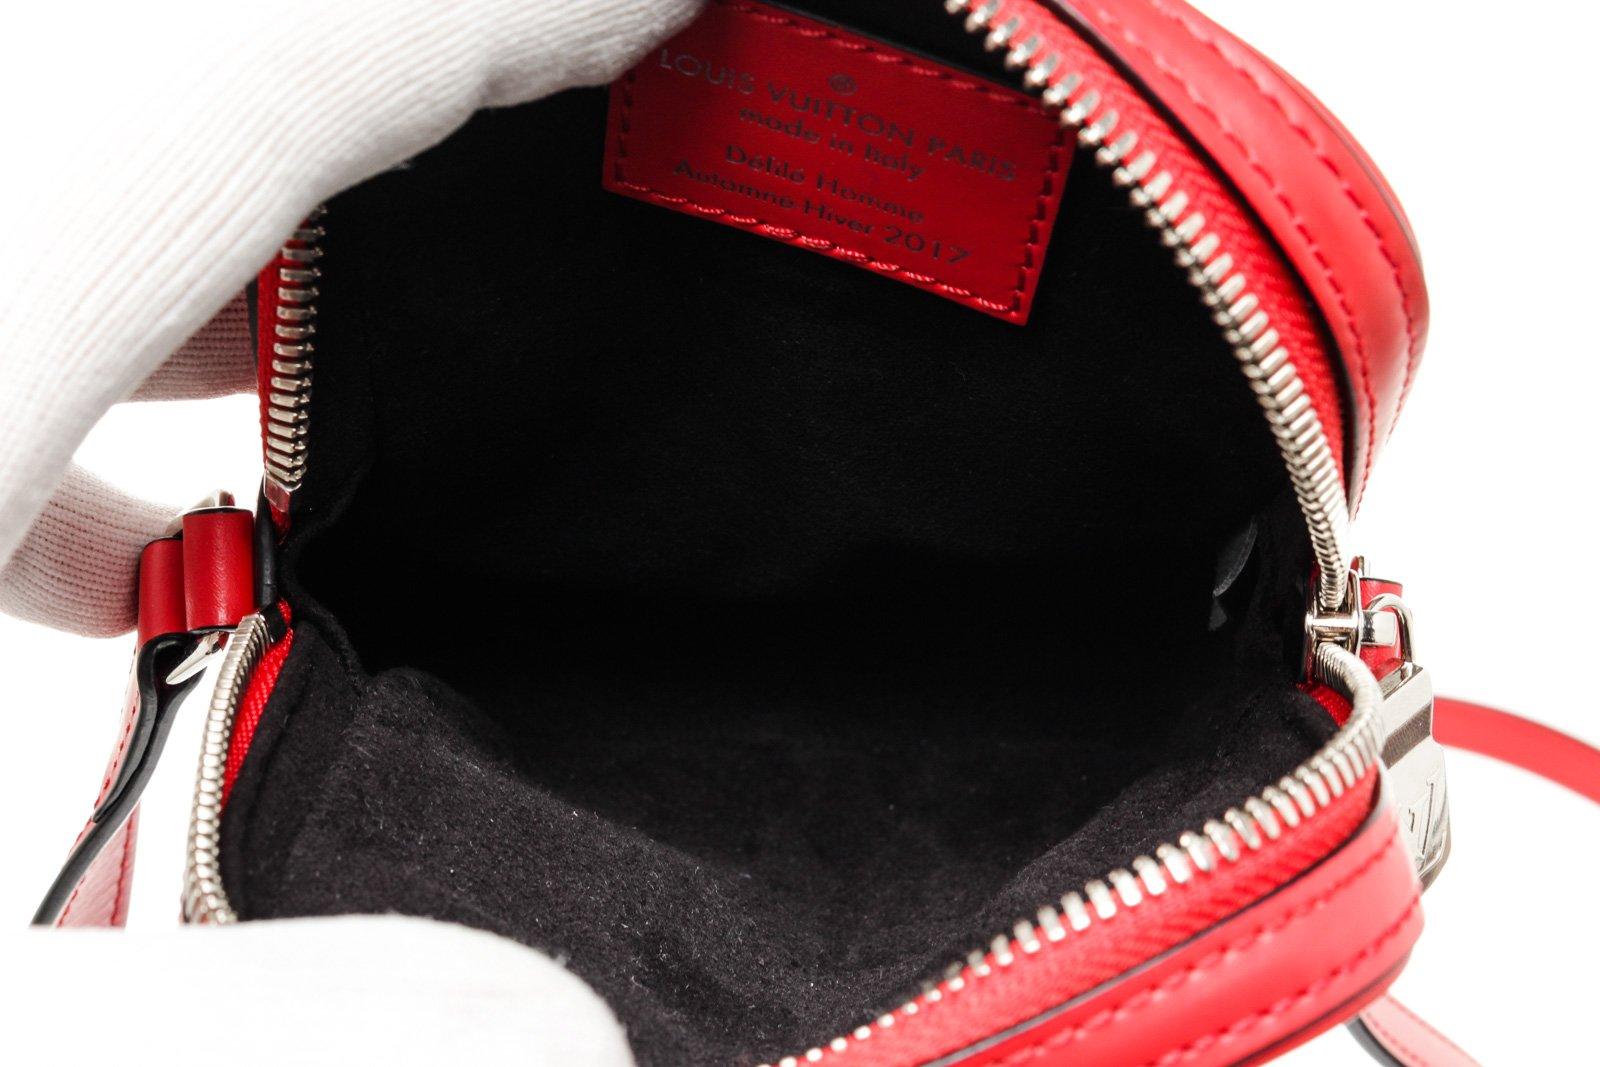 Louis Vuitton Red Epi Leather X Supreme Mini Wallet with epi leather, gold-tone hardware, trim tan vachetta leather, interior slip pocket, shoulder strap and zipper closure.

47480MSC